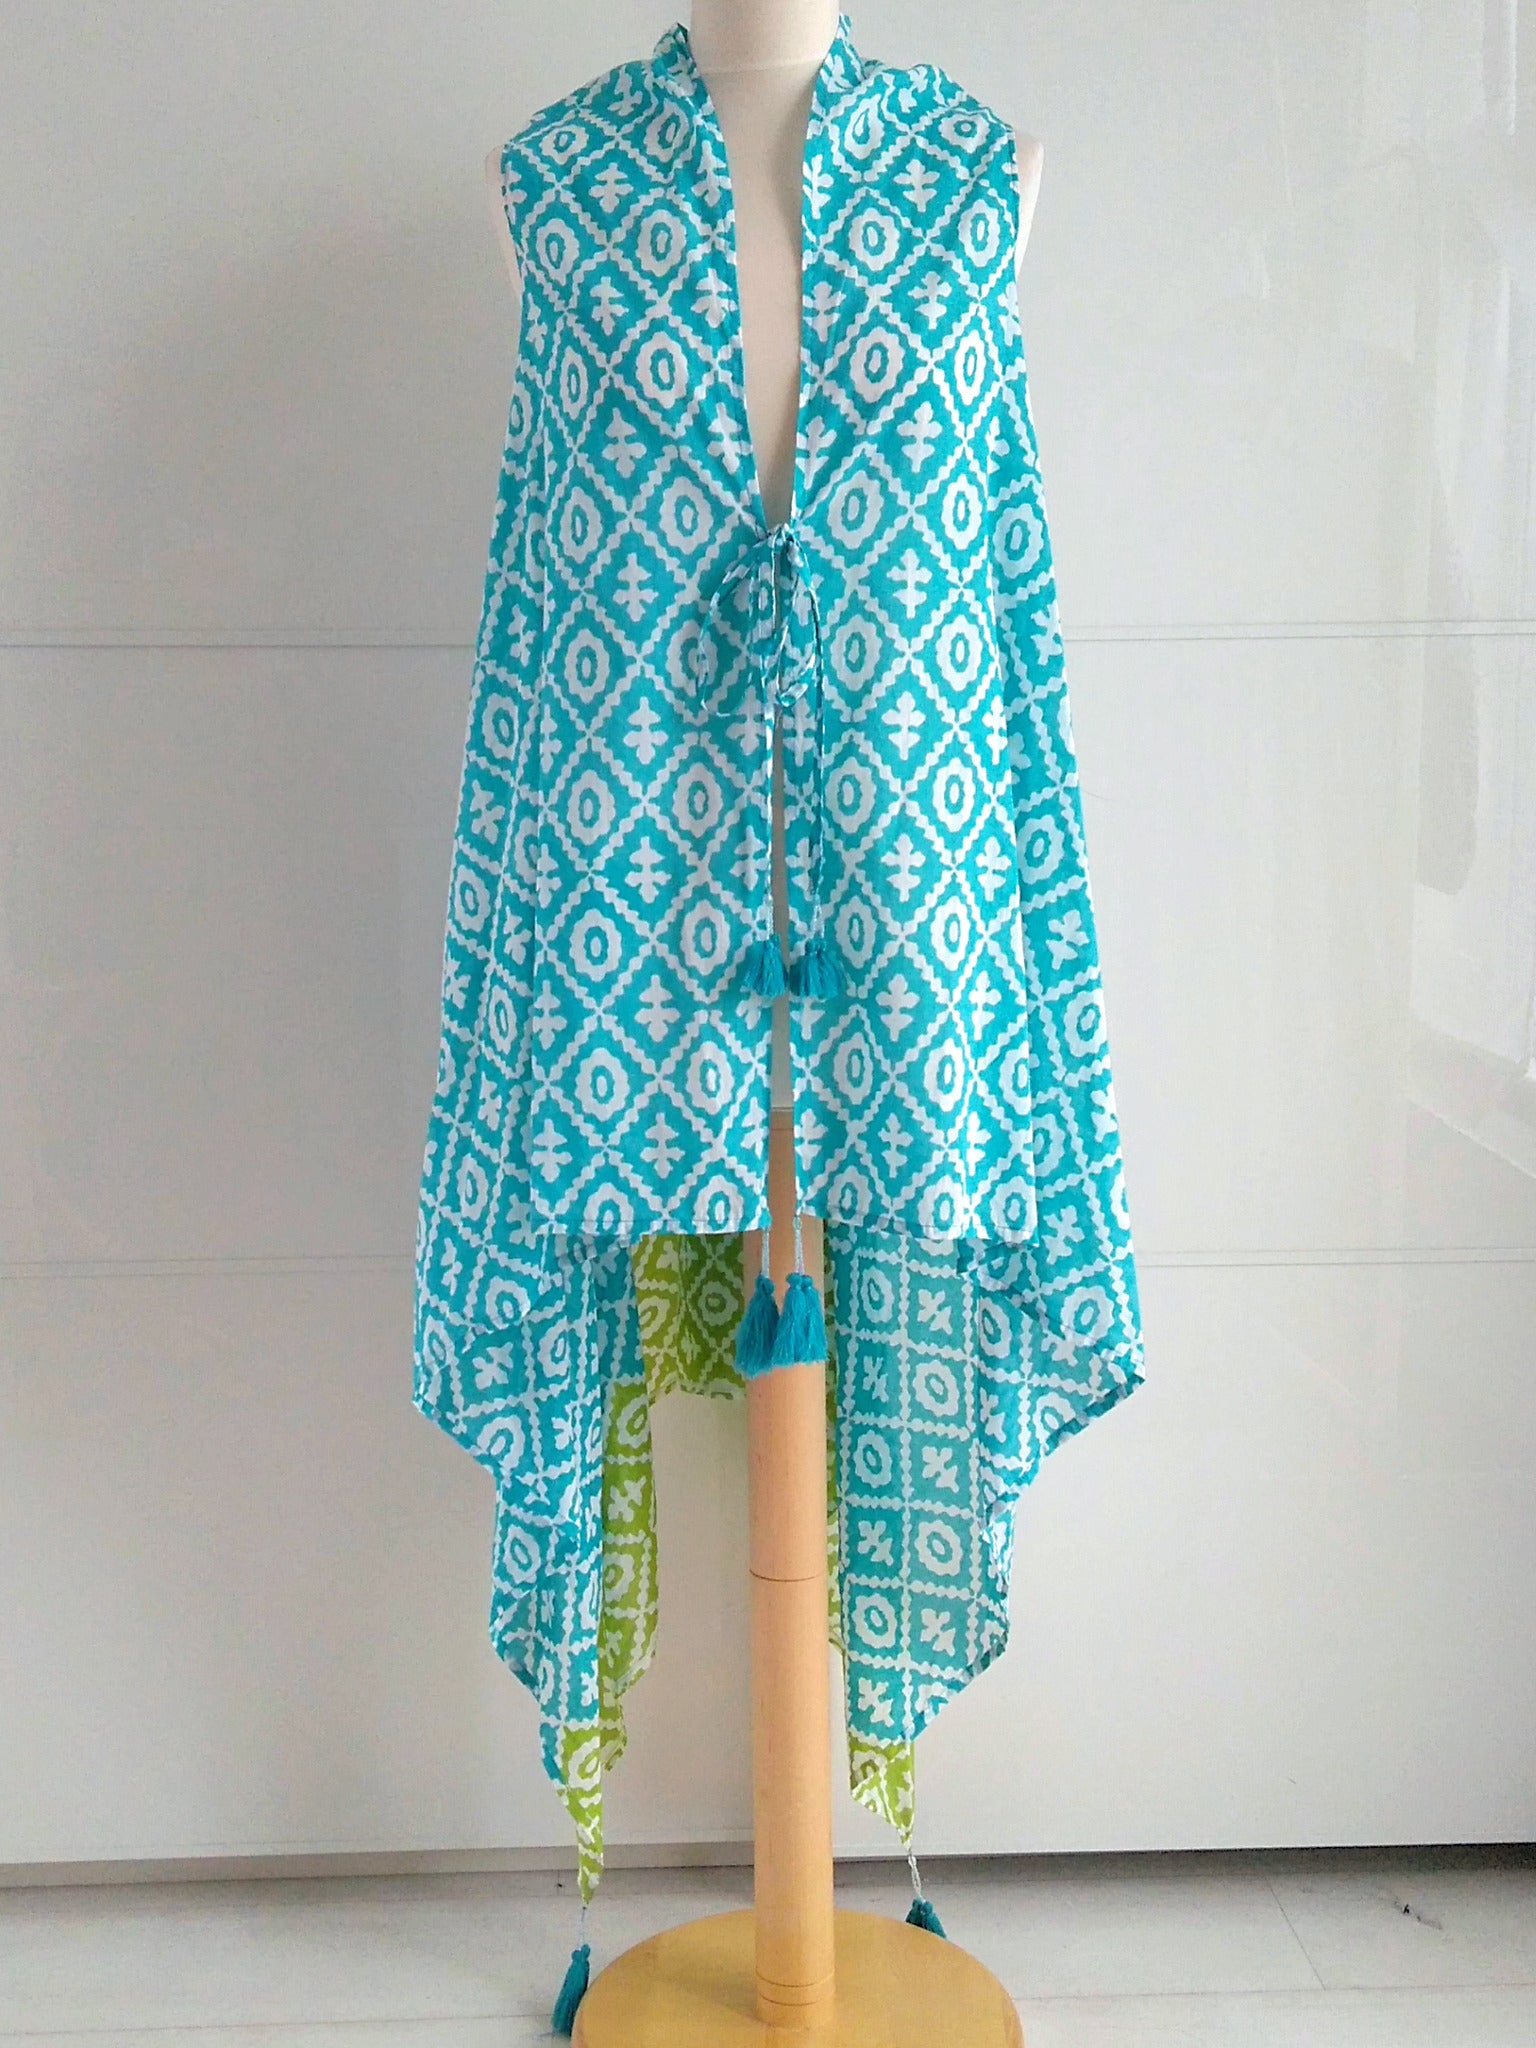 Bahamas Sleeveless Jacket Cover Up - Turquoise & Lime - An Indian Summer